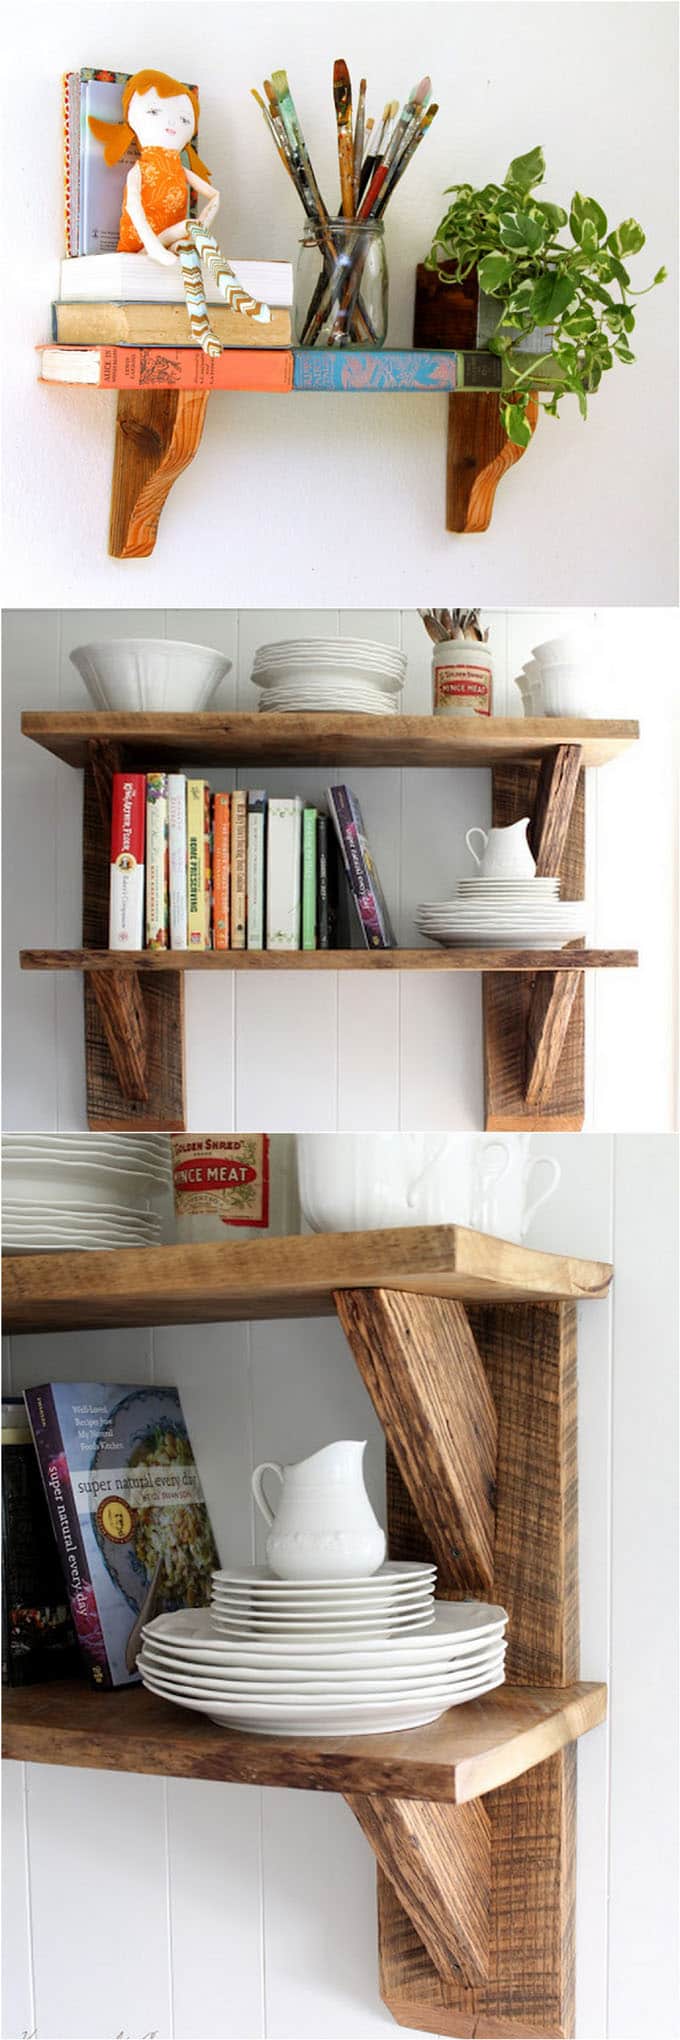 Easy DIY Hanging Shelf/ Floating shelf, No Bracket